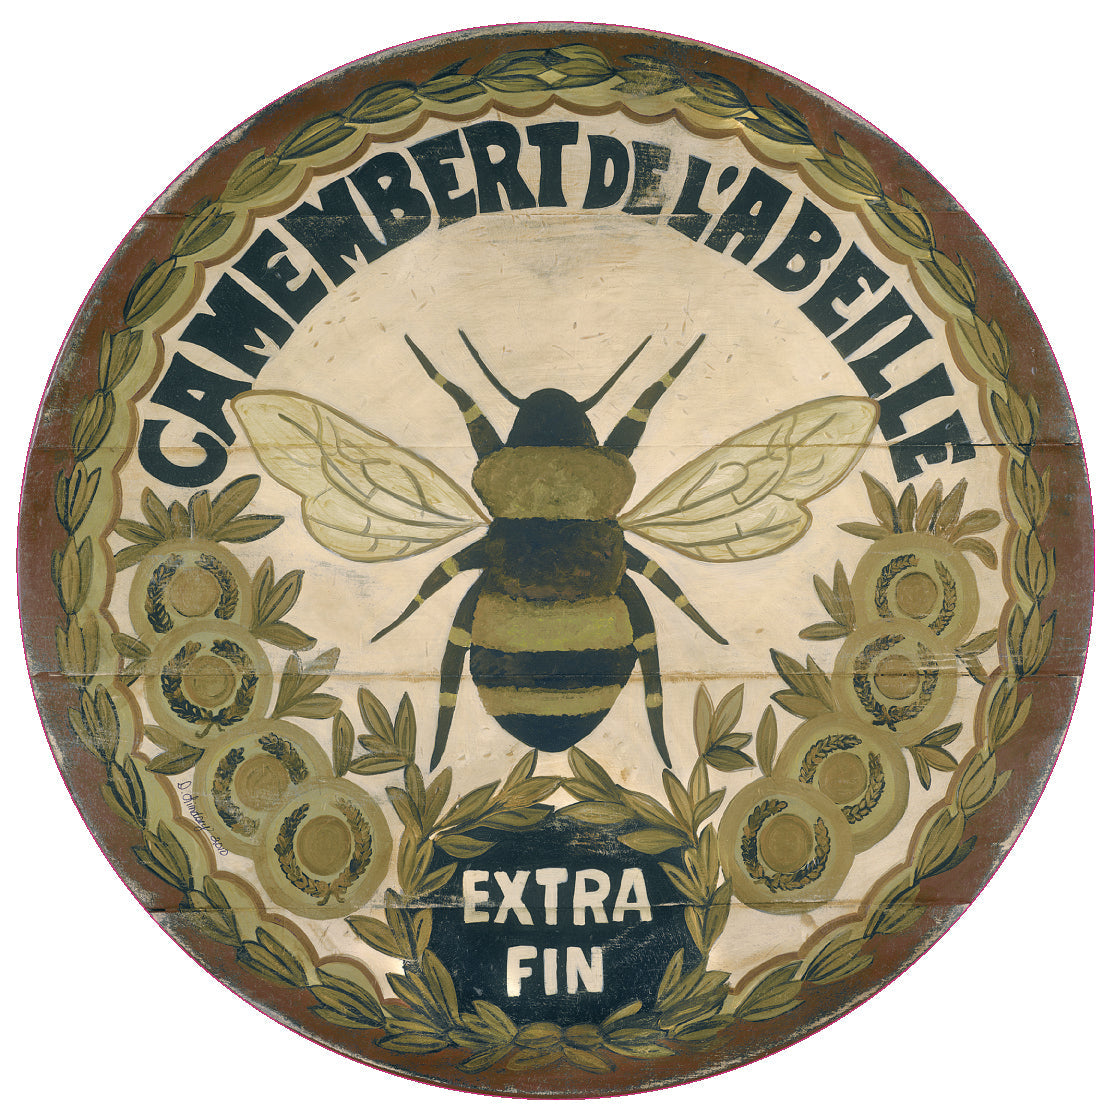 Camembert Bee Art by Darrellene Designs